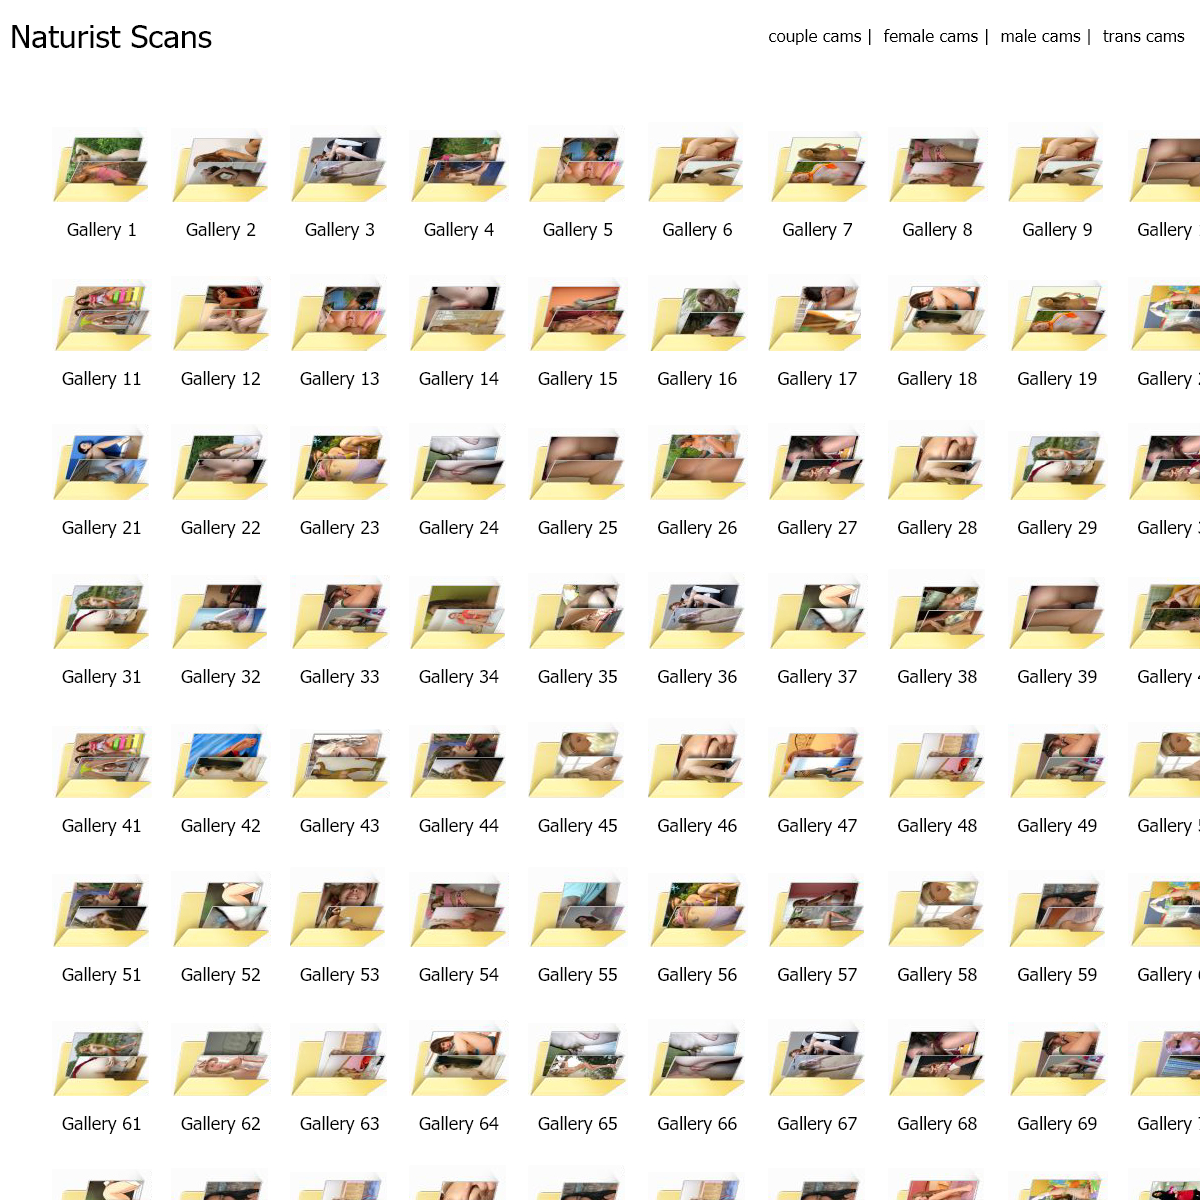 A complete backup of www.naturistscans.com